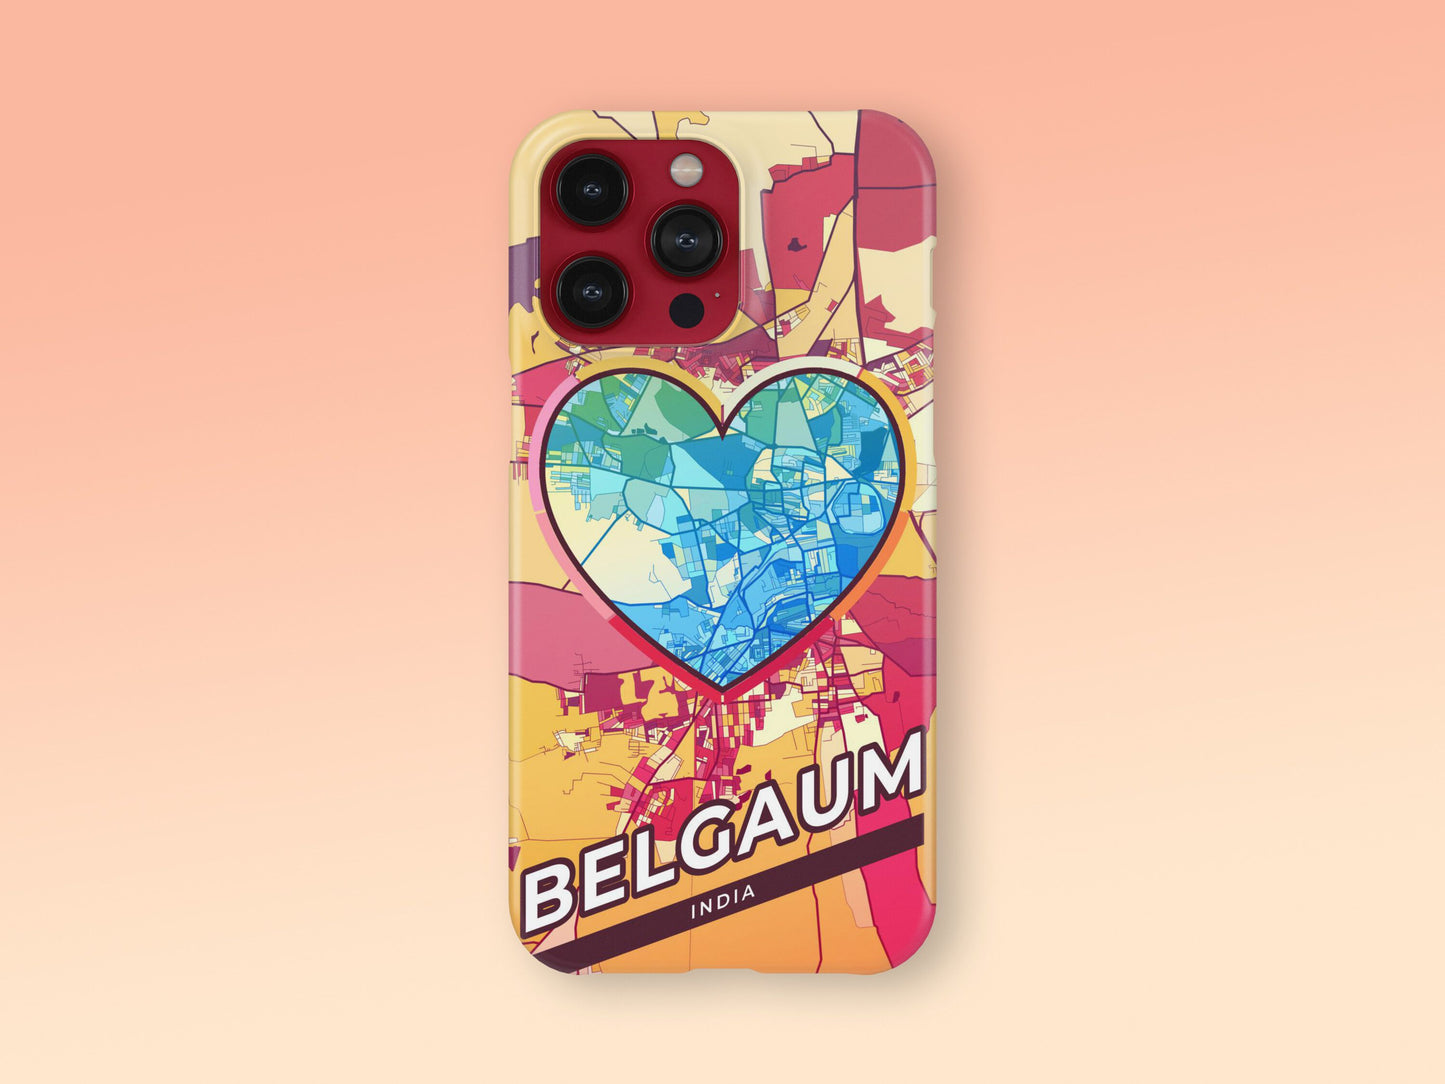 Belgaum India slim phone case with colorful icon. Birthday, wedding or housewarming gift. Couple match cases. 2